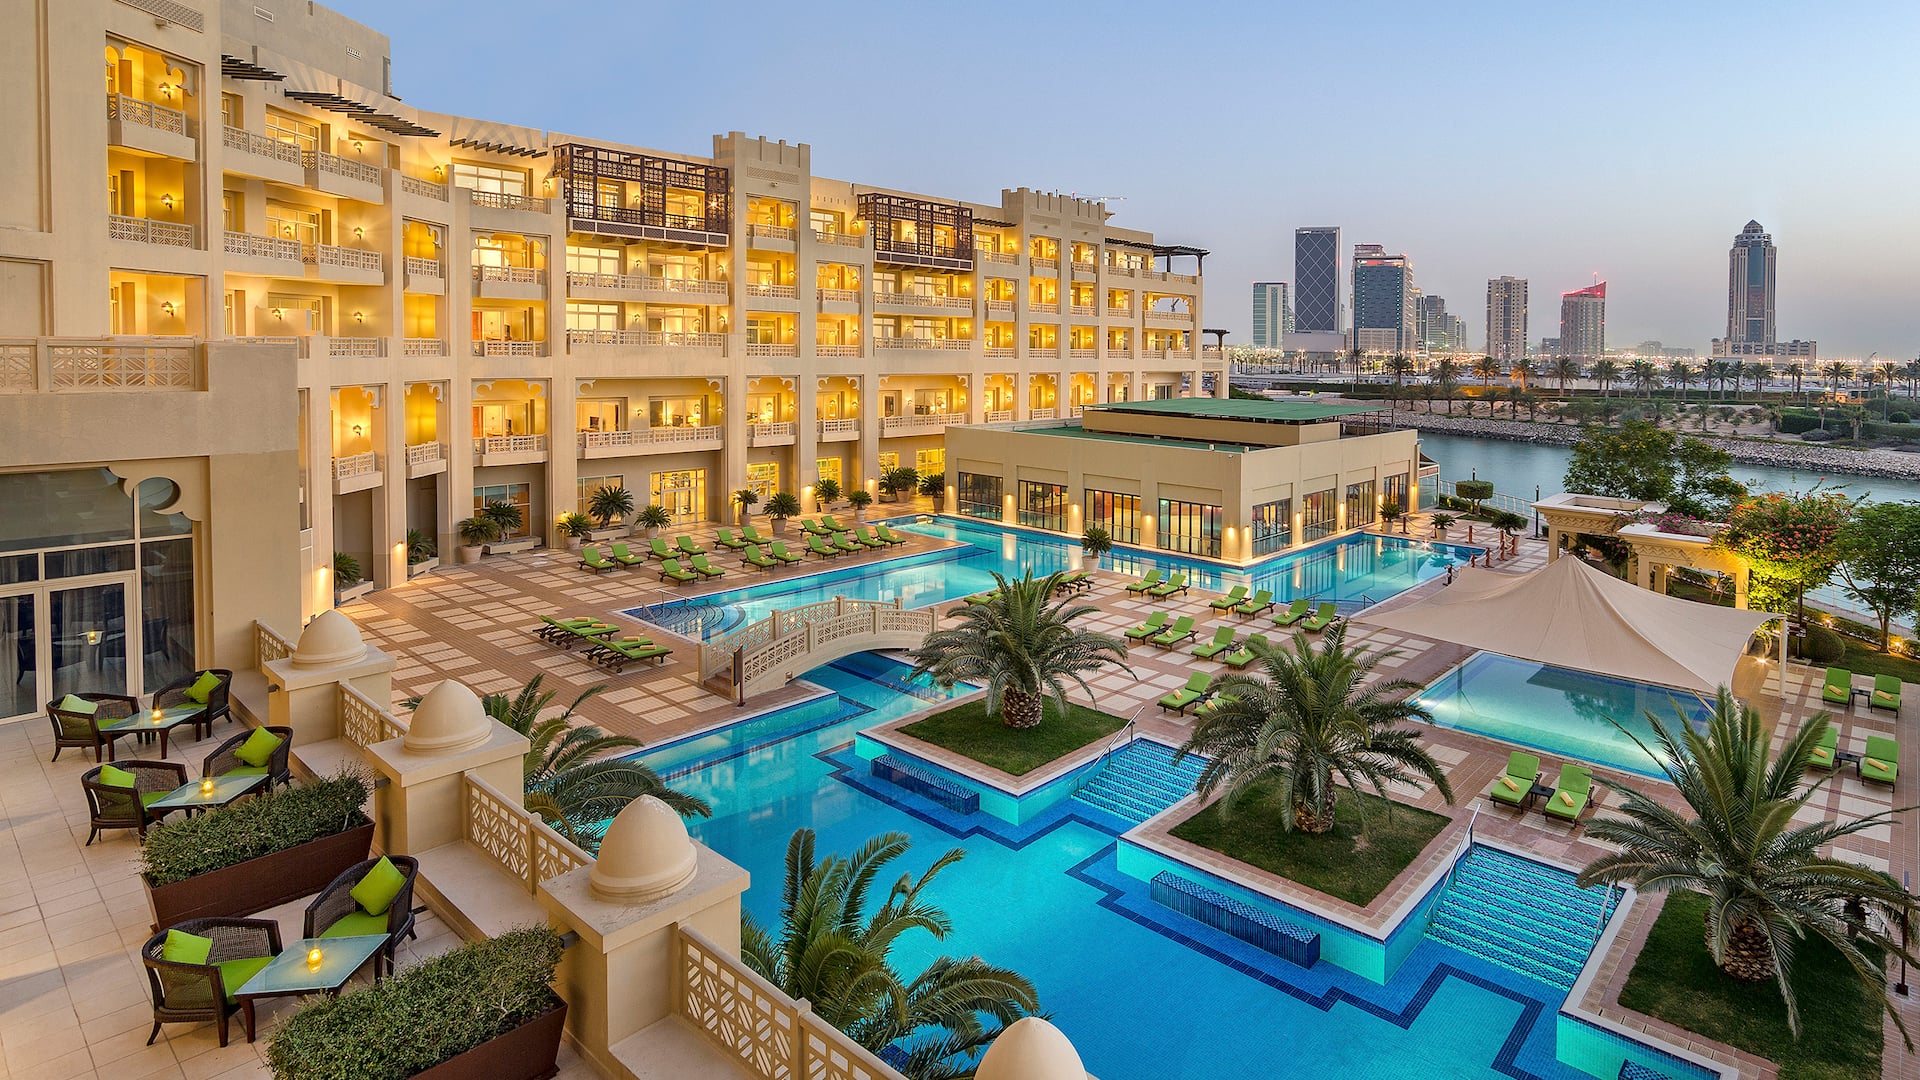 Map & Directions to Doha Hotel | Grand Hyatt Doha